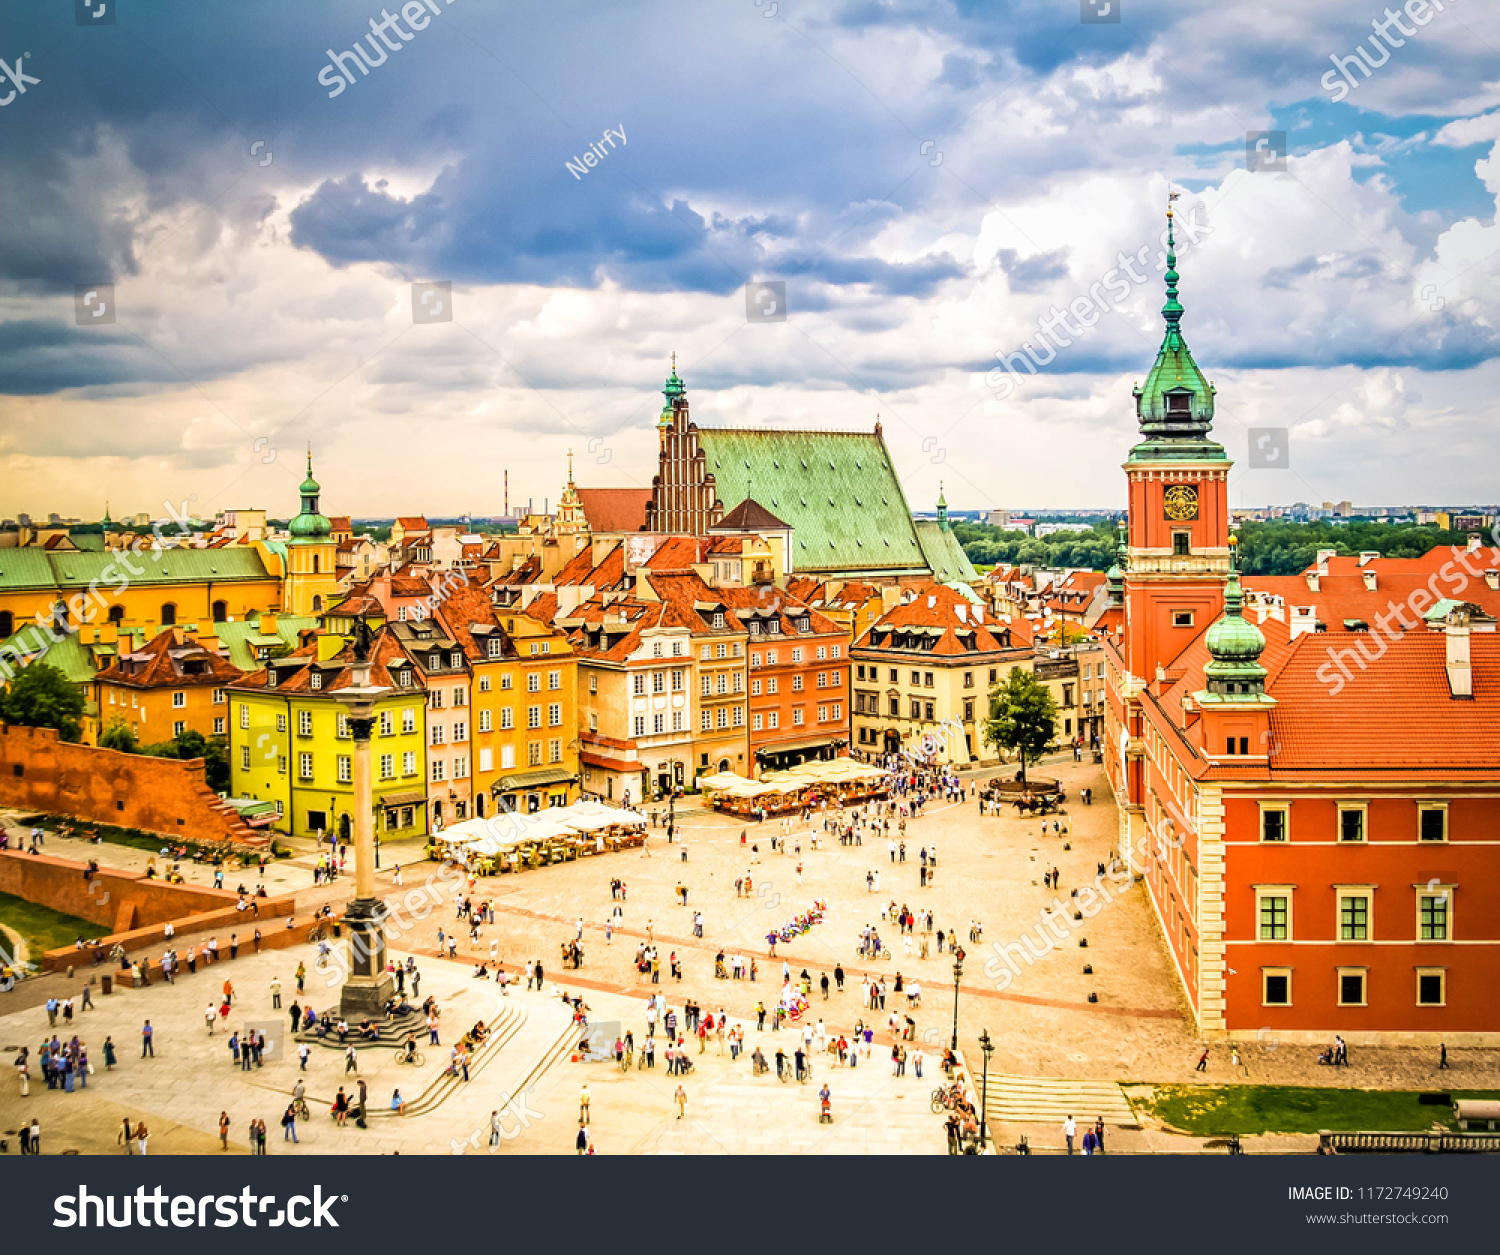 Old town square, Warsaw Poland, retro toned #1172749240